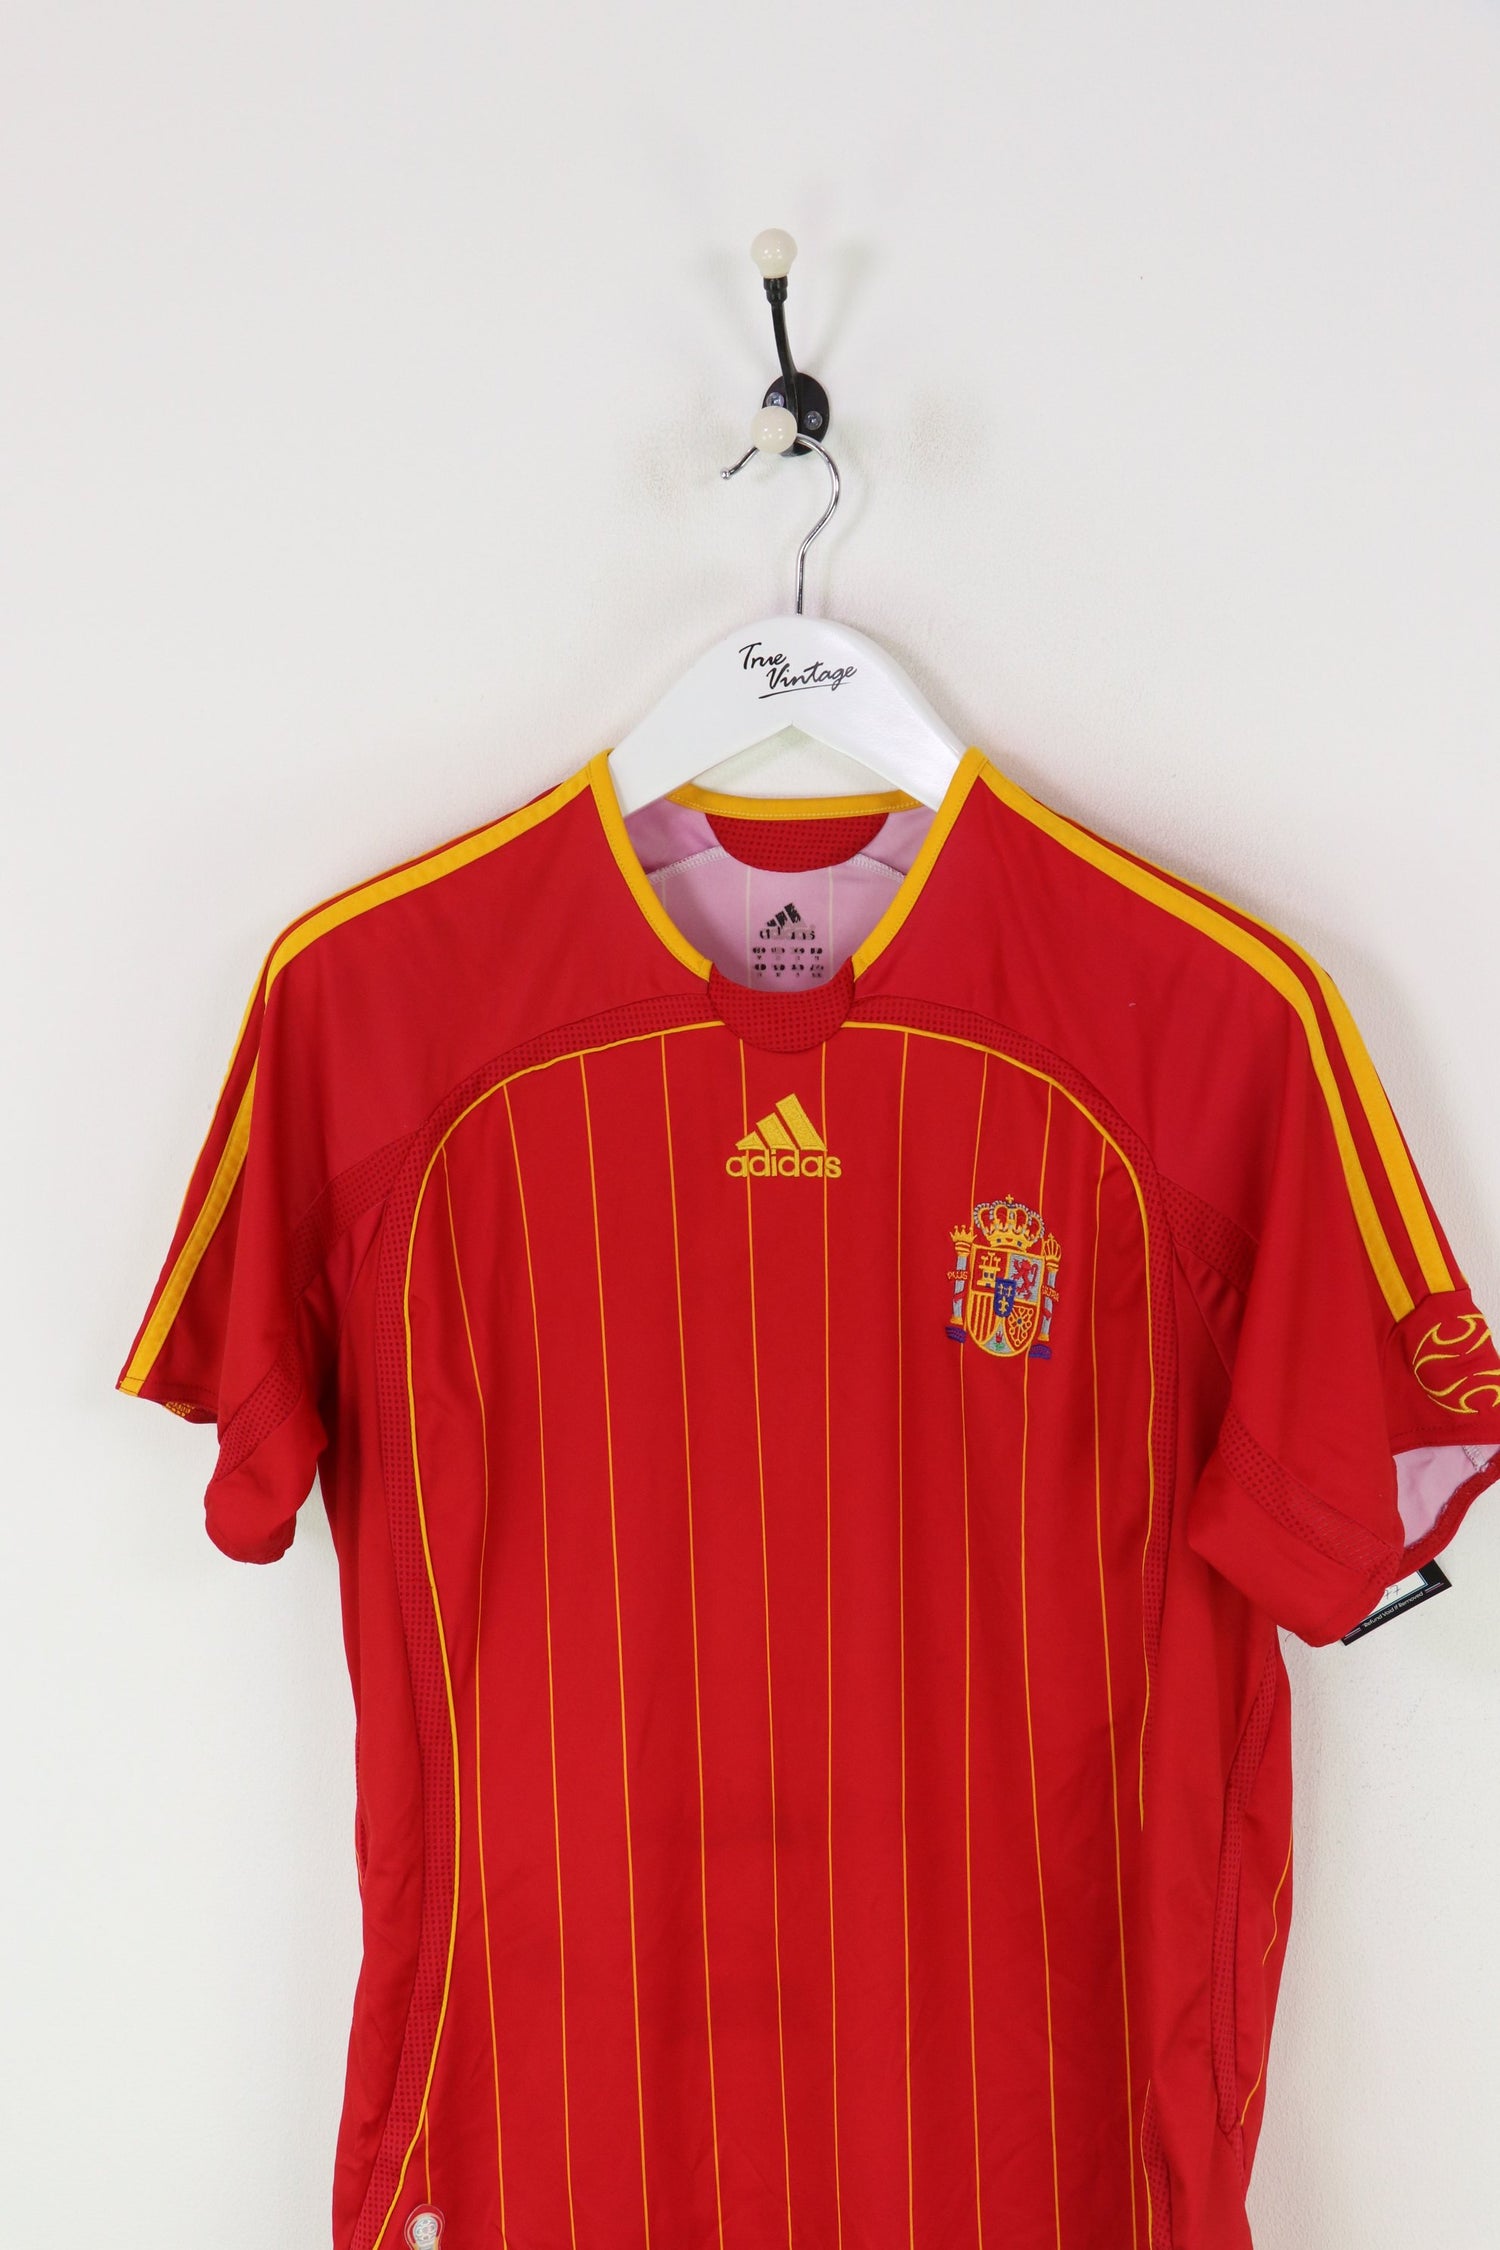 Adidas Spain Football Shirt Red/Yellow Medium